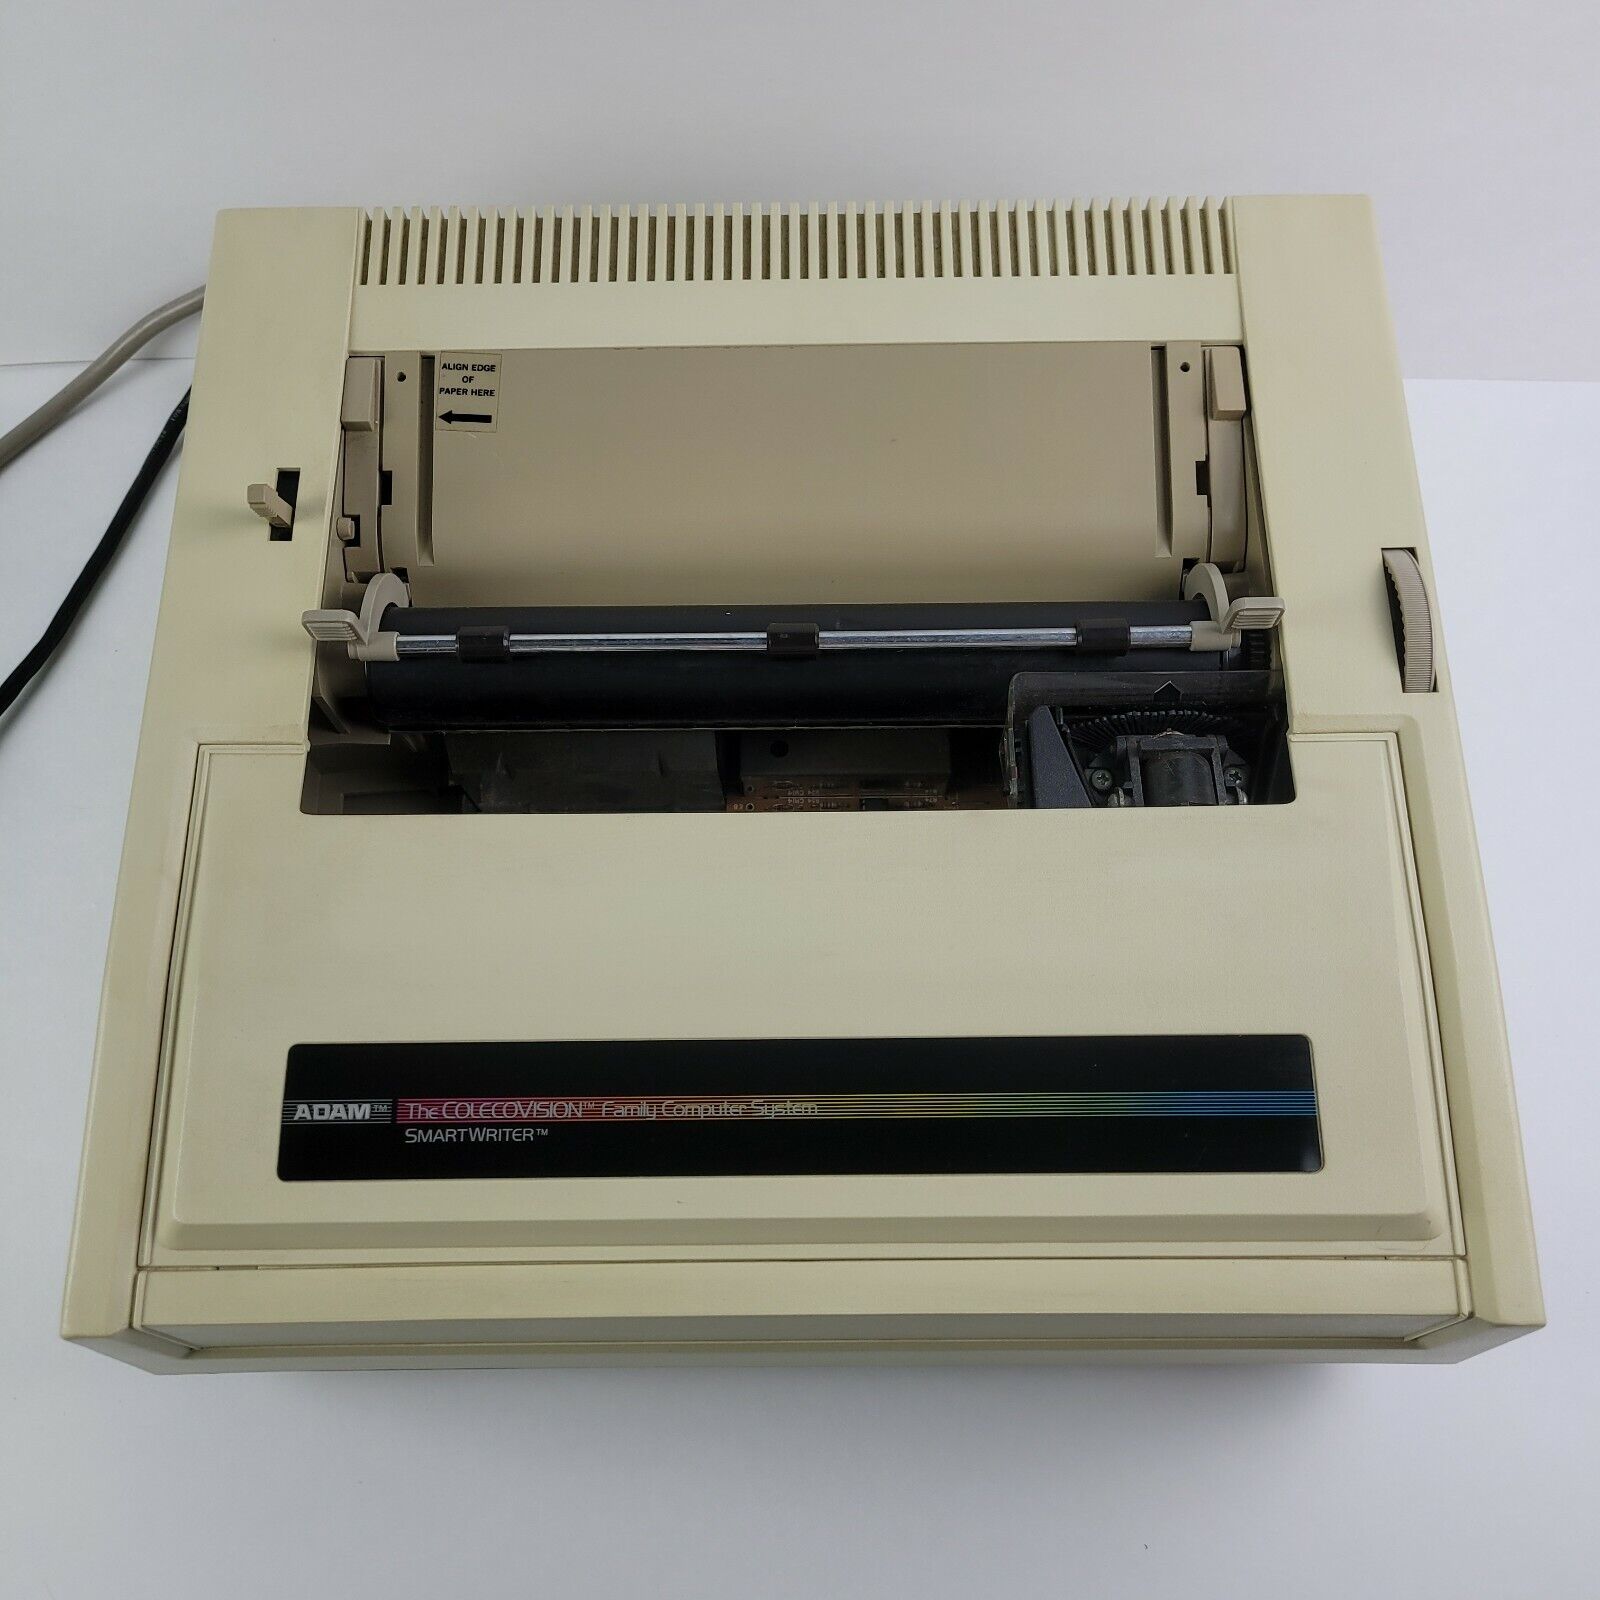 Vintage Coleco Adam SmartWriter Printer Model 41021 